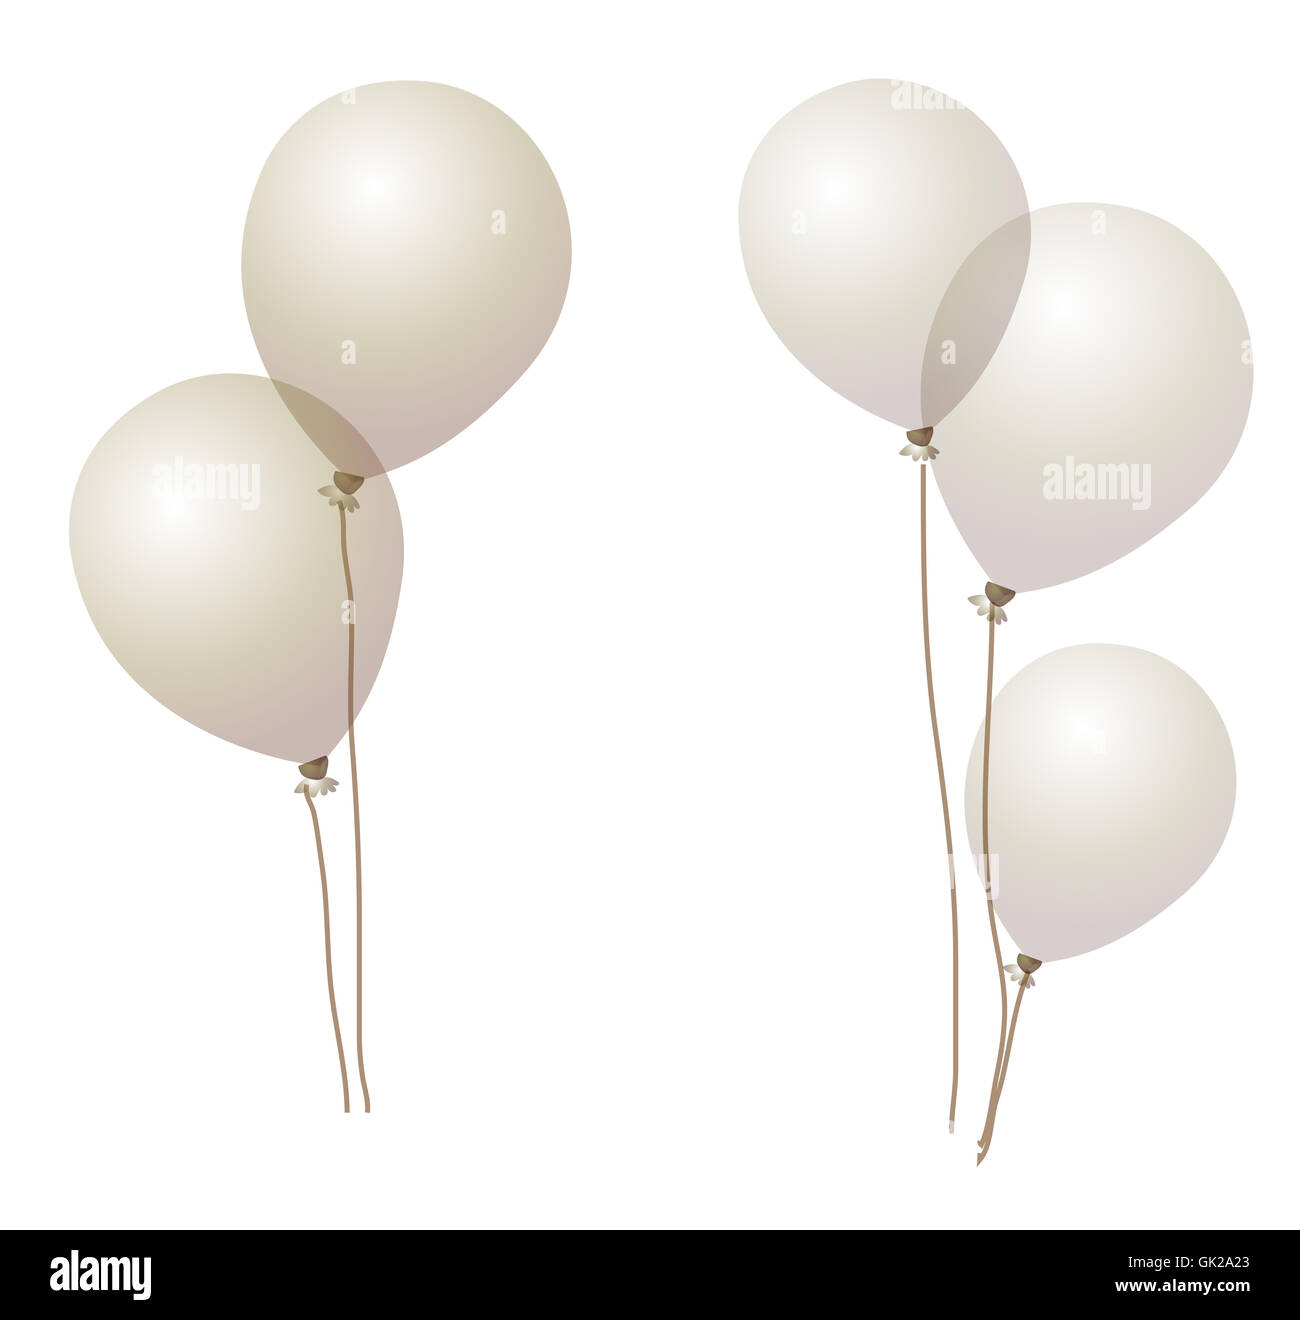 Objet ballons ballon Photo Stock - Alamy